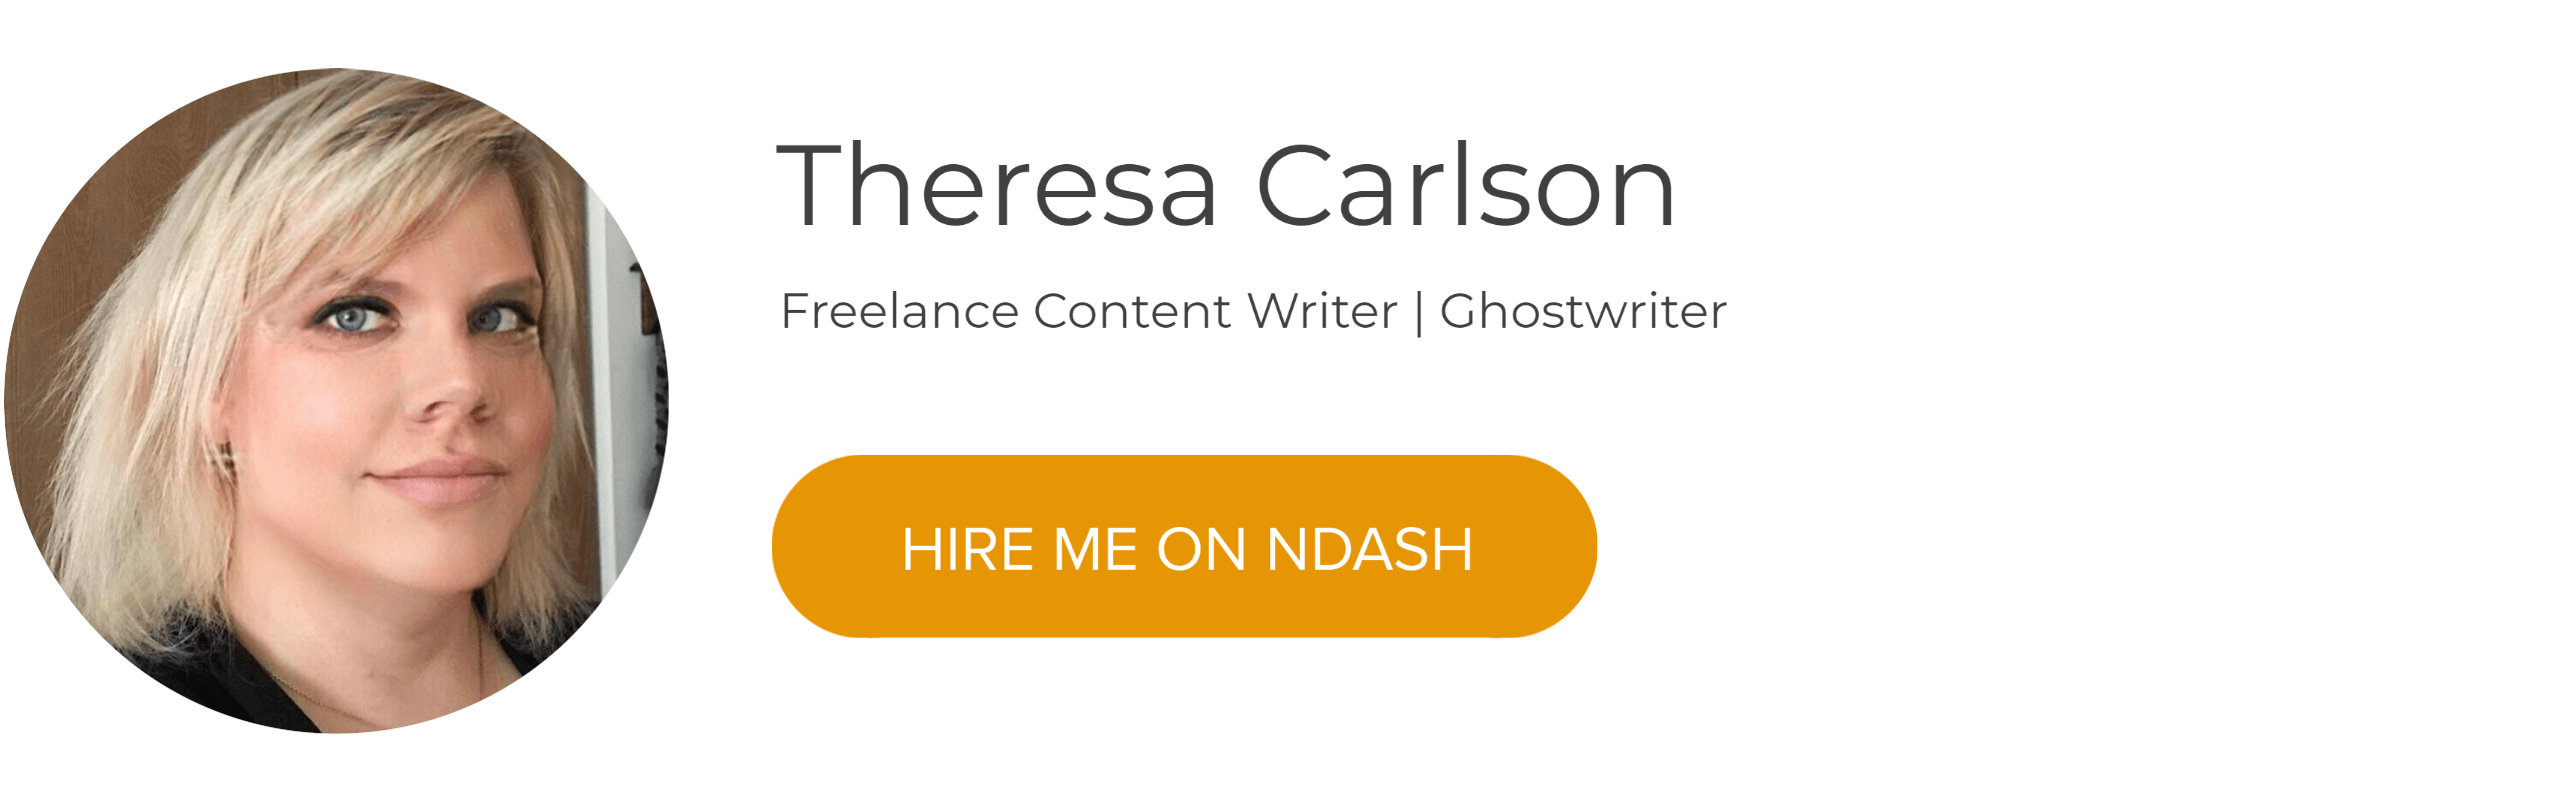 Theresa Carlson: Freelance Content Writer